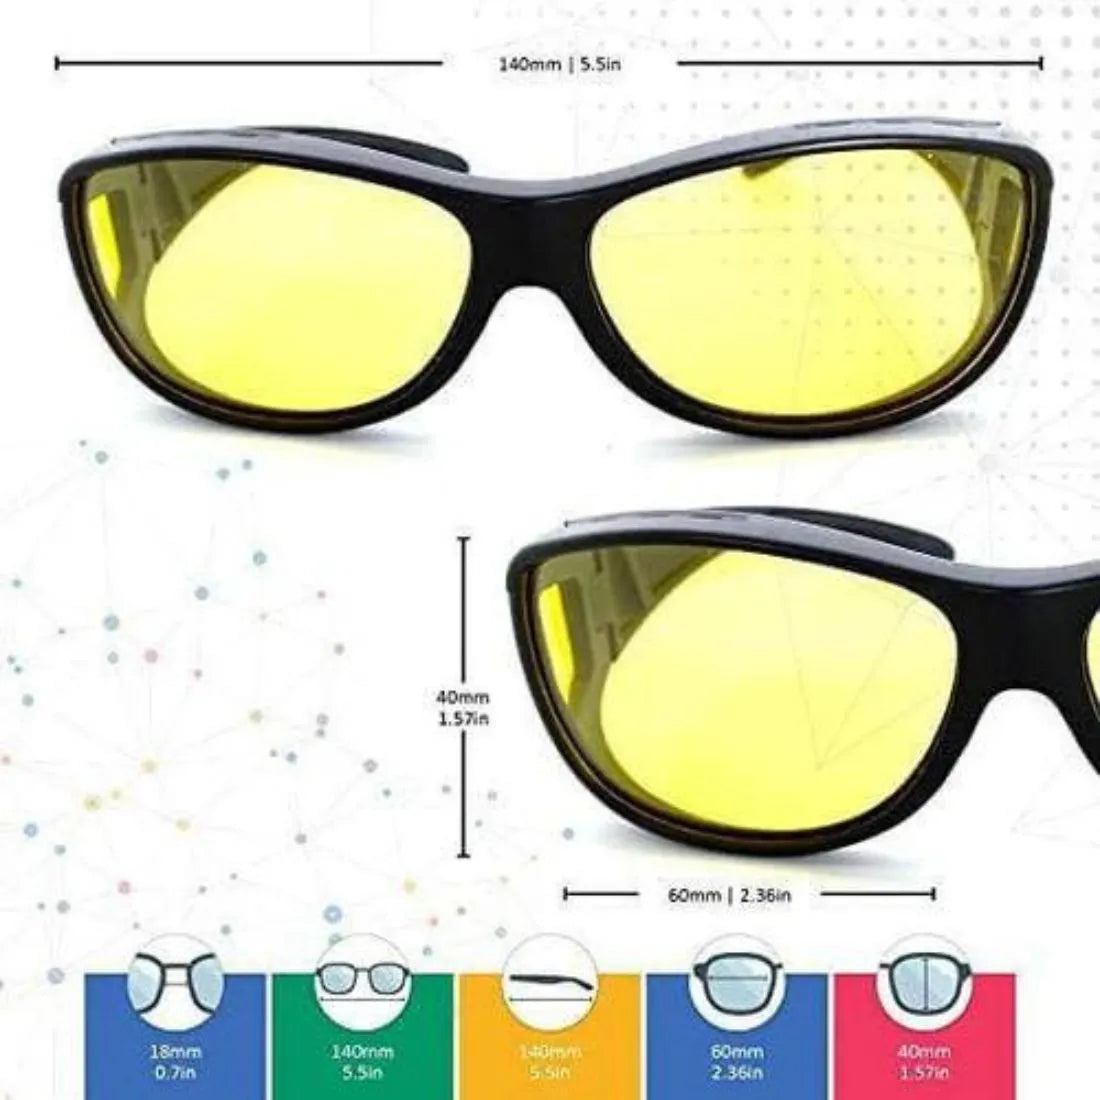 Enhance Night Driving with Dreamzhub Night Vision Glasses | Reduce Glare & Eye Strain